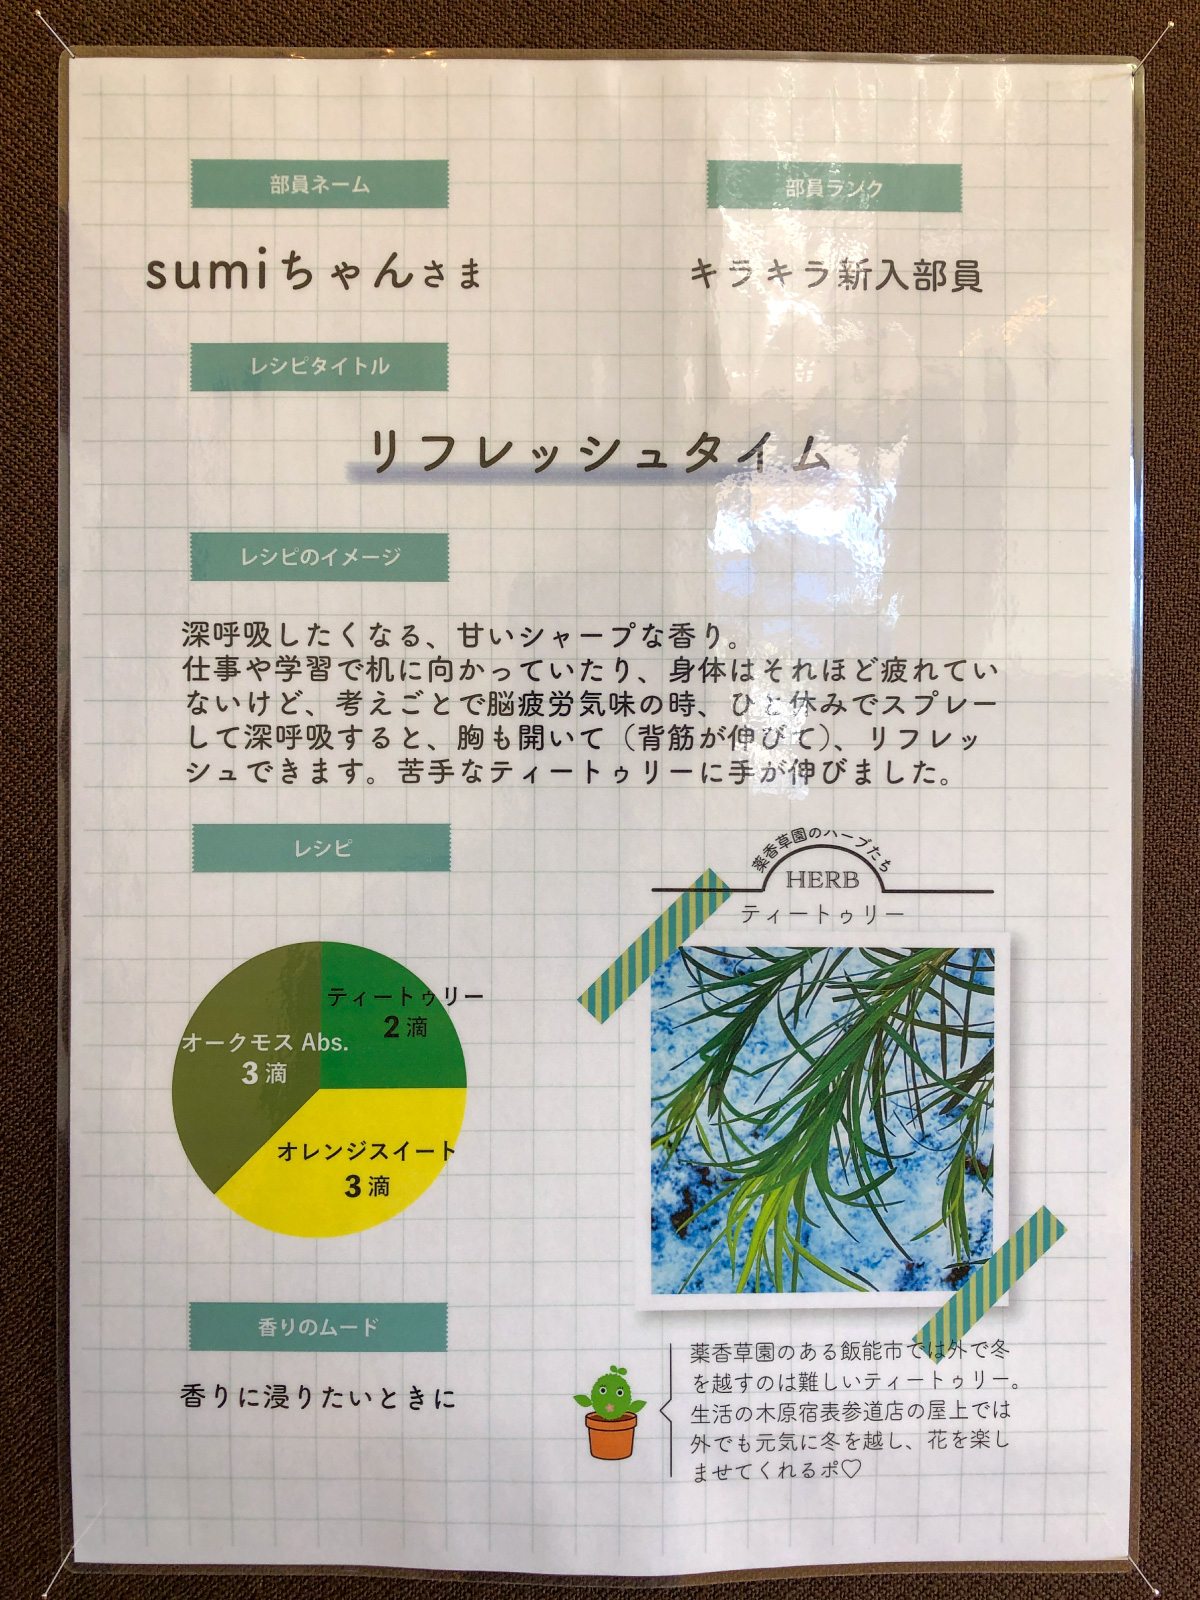 https://www.treeoflife.co.jp/library/aromabu/images/poster_4_sumichan.jpg